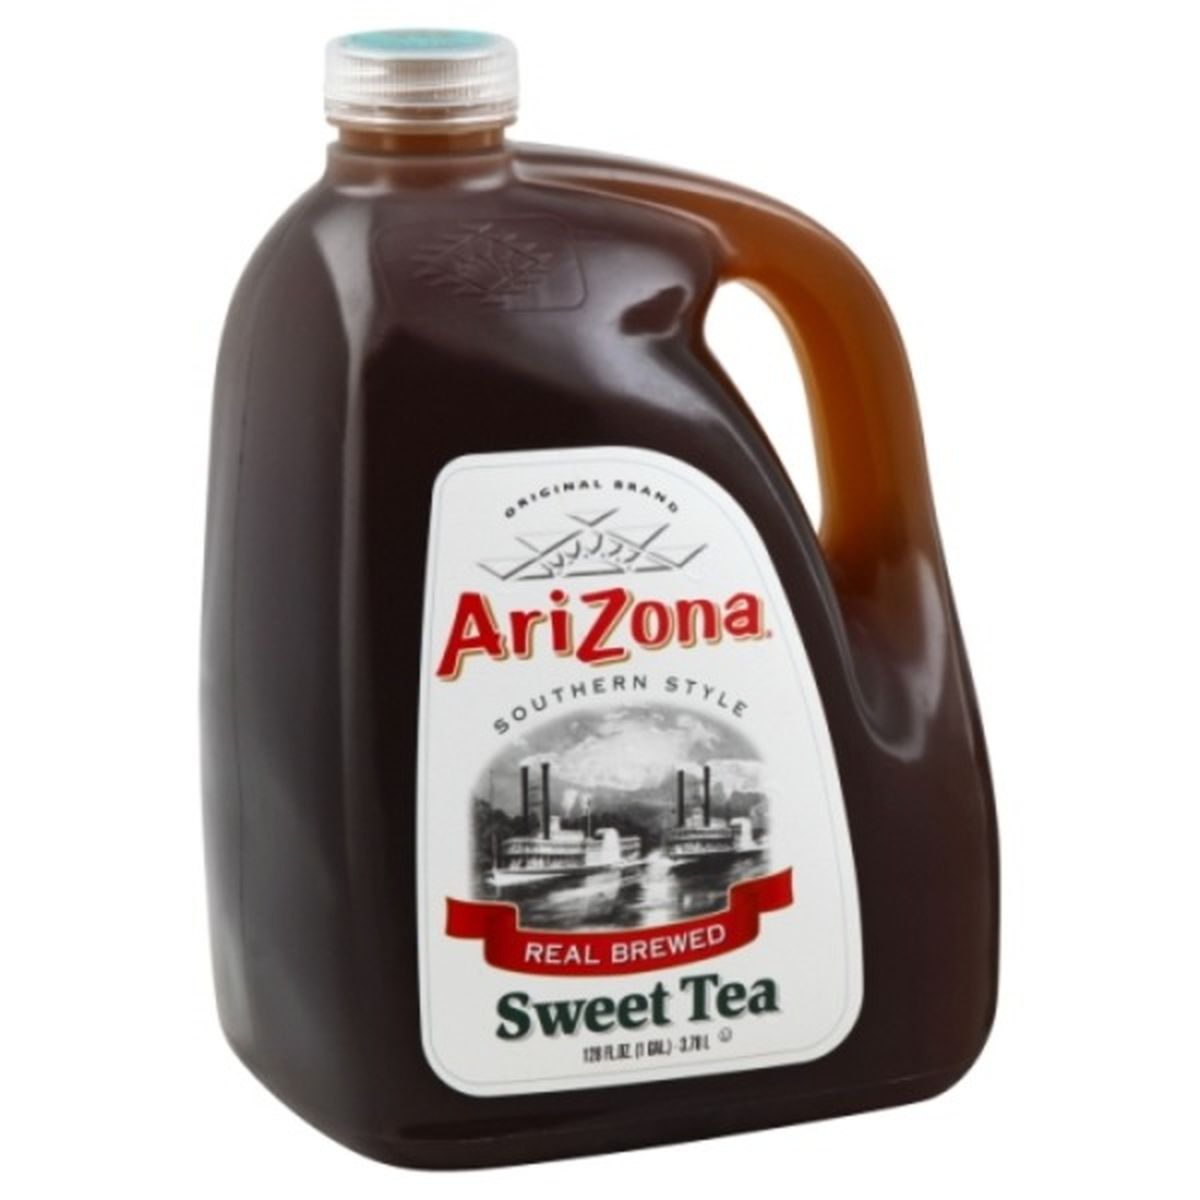 Calories in Arizona Sweet Tea, Southern Style